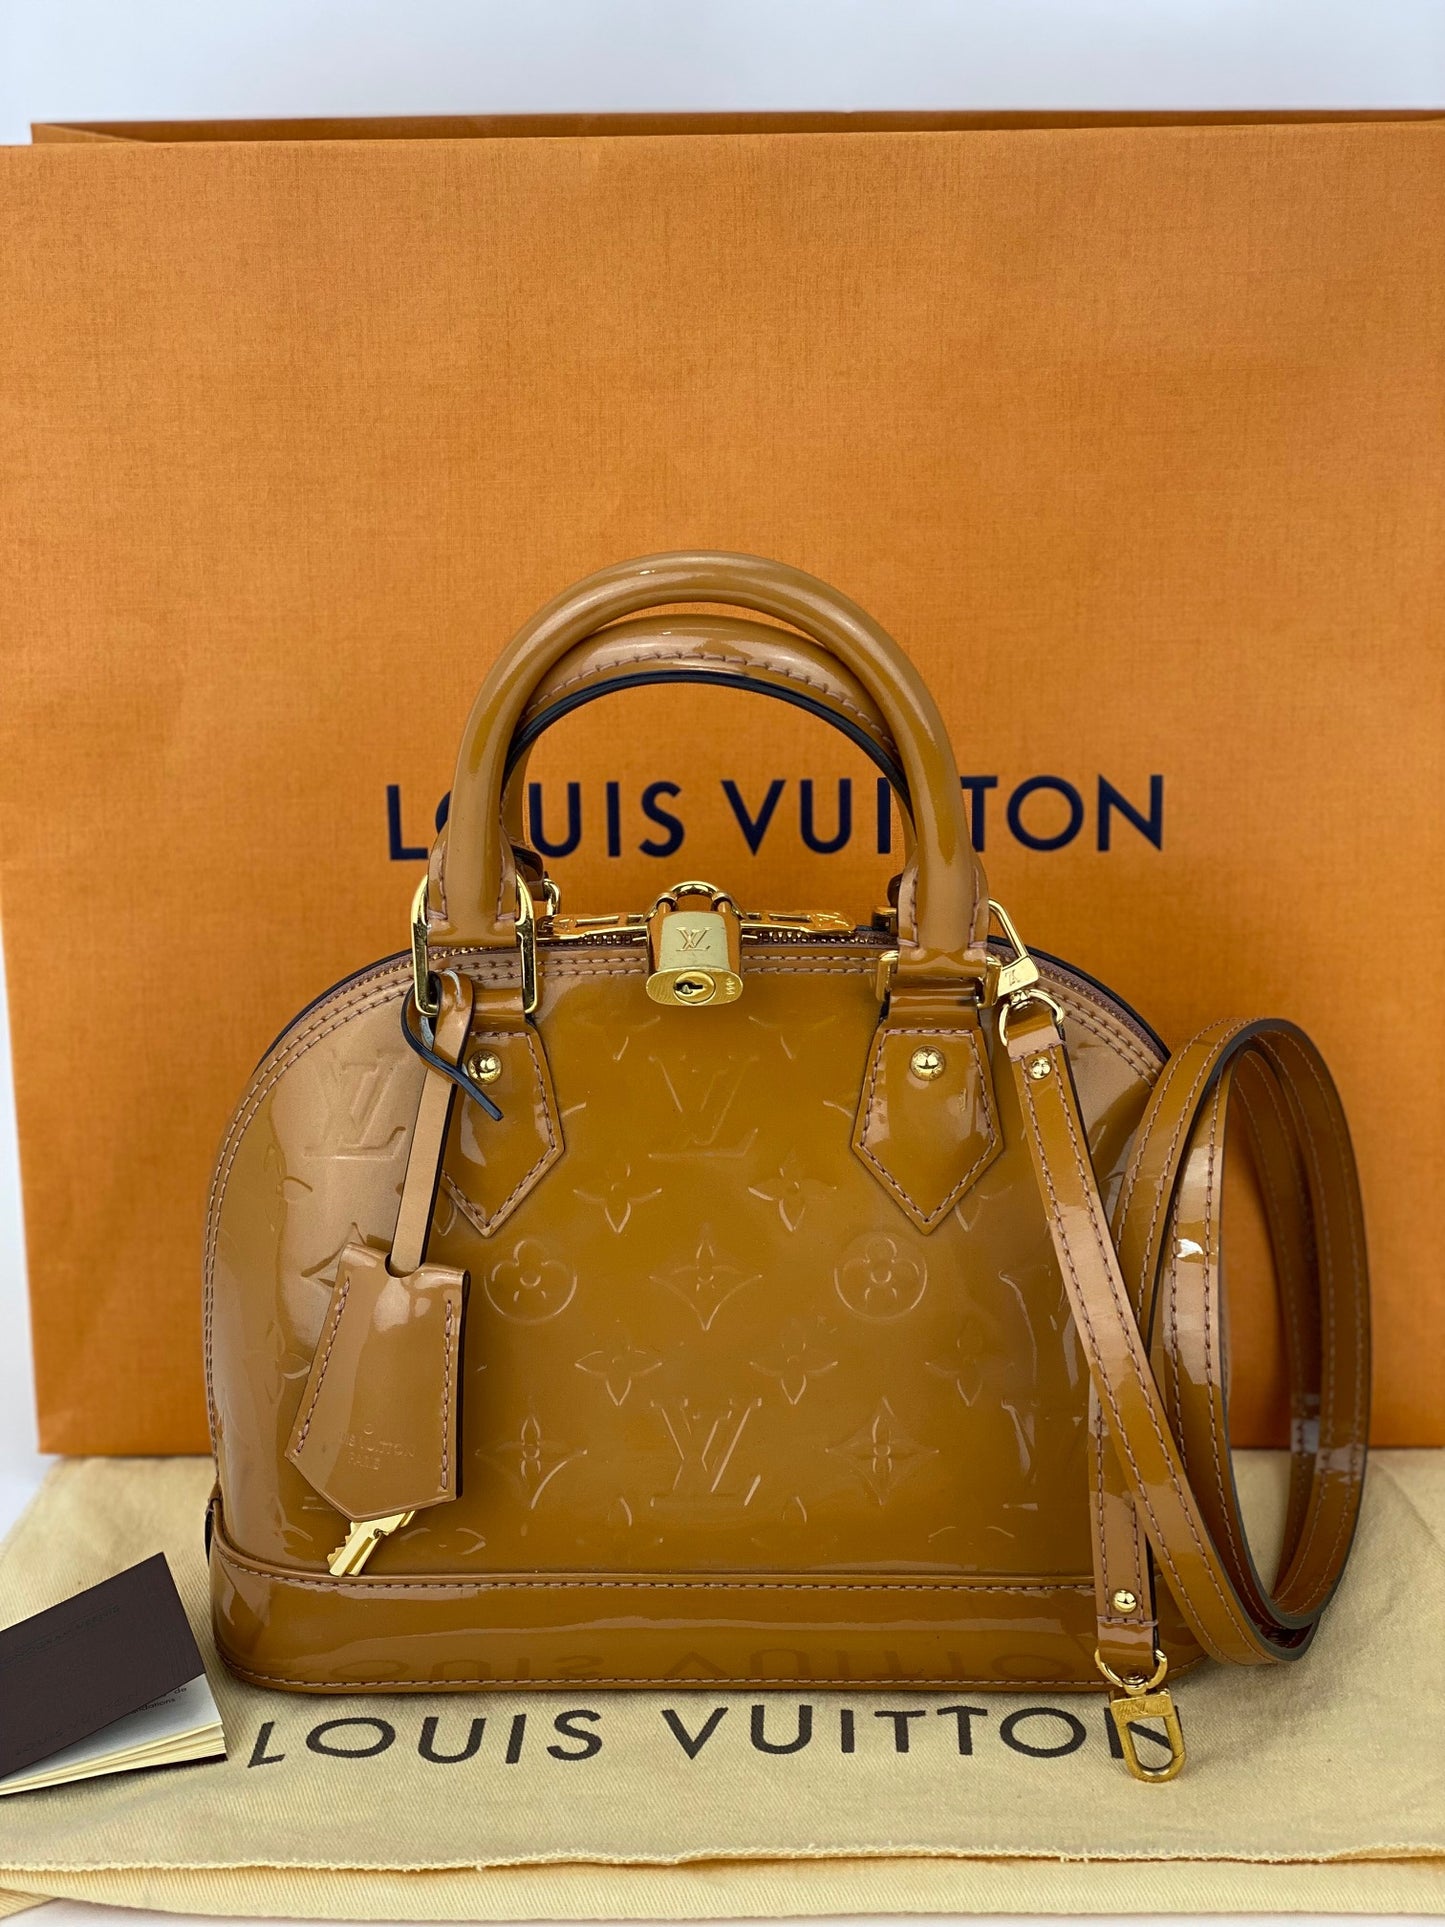 Louis Vuitton Alma BB Monogram Vernis Crossbody Bag Black